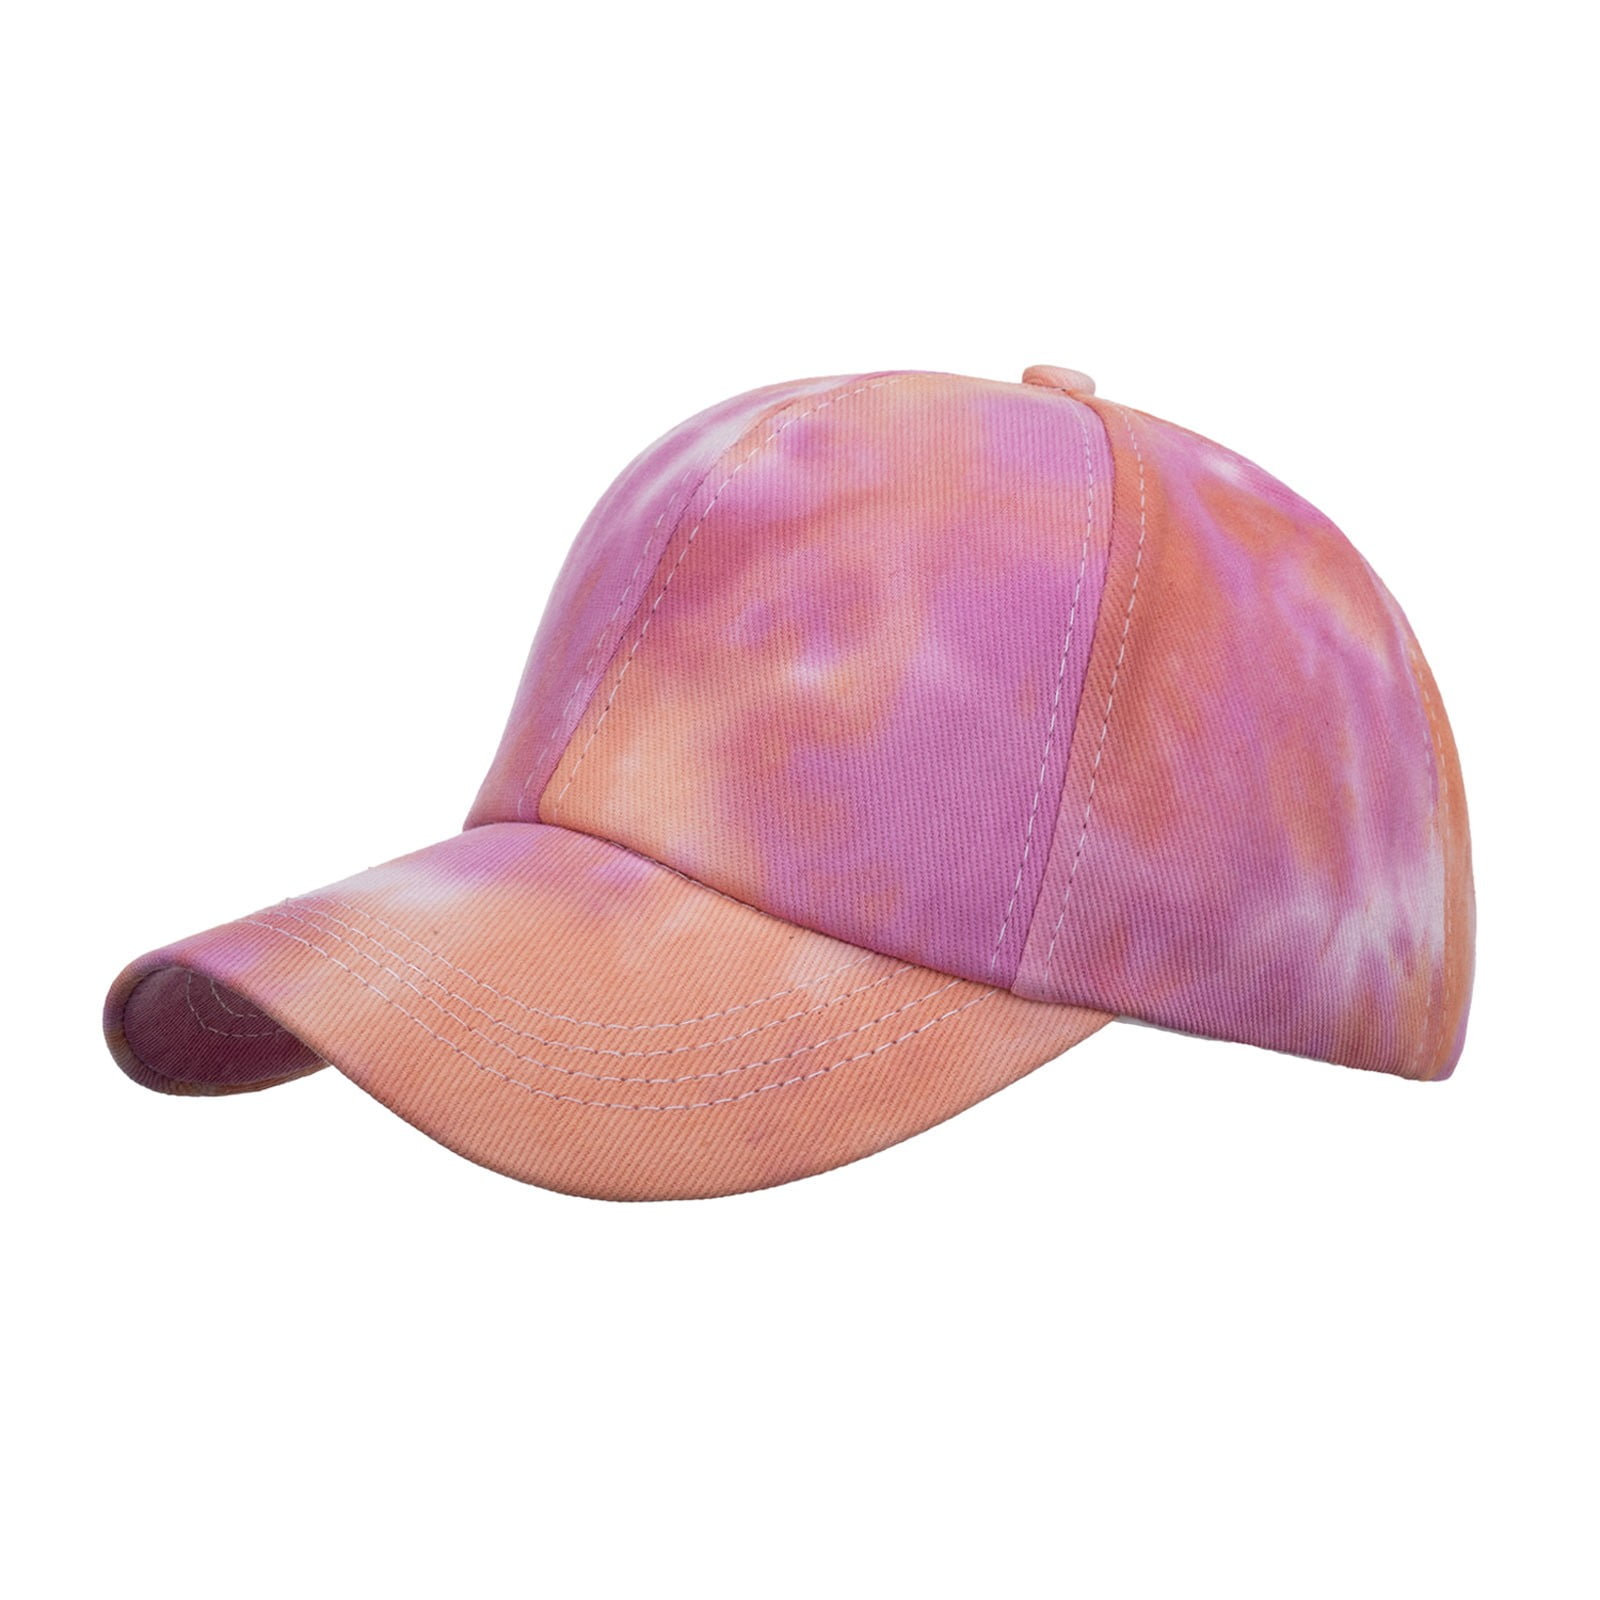 mnjin baseball caps fashion women men sport gradient tie dye breathable  beach adjustable baseball cap hat sun hat beanies for winter c